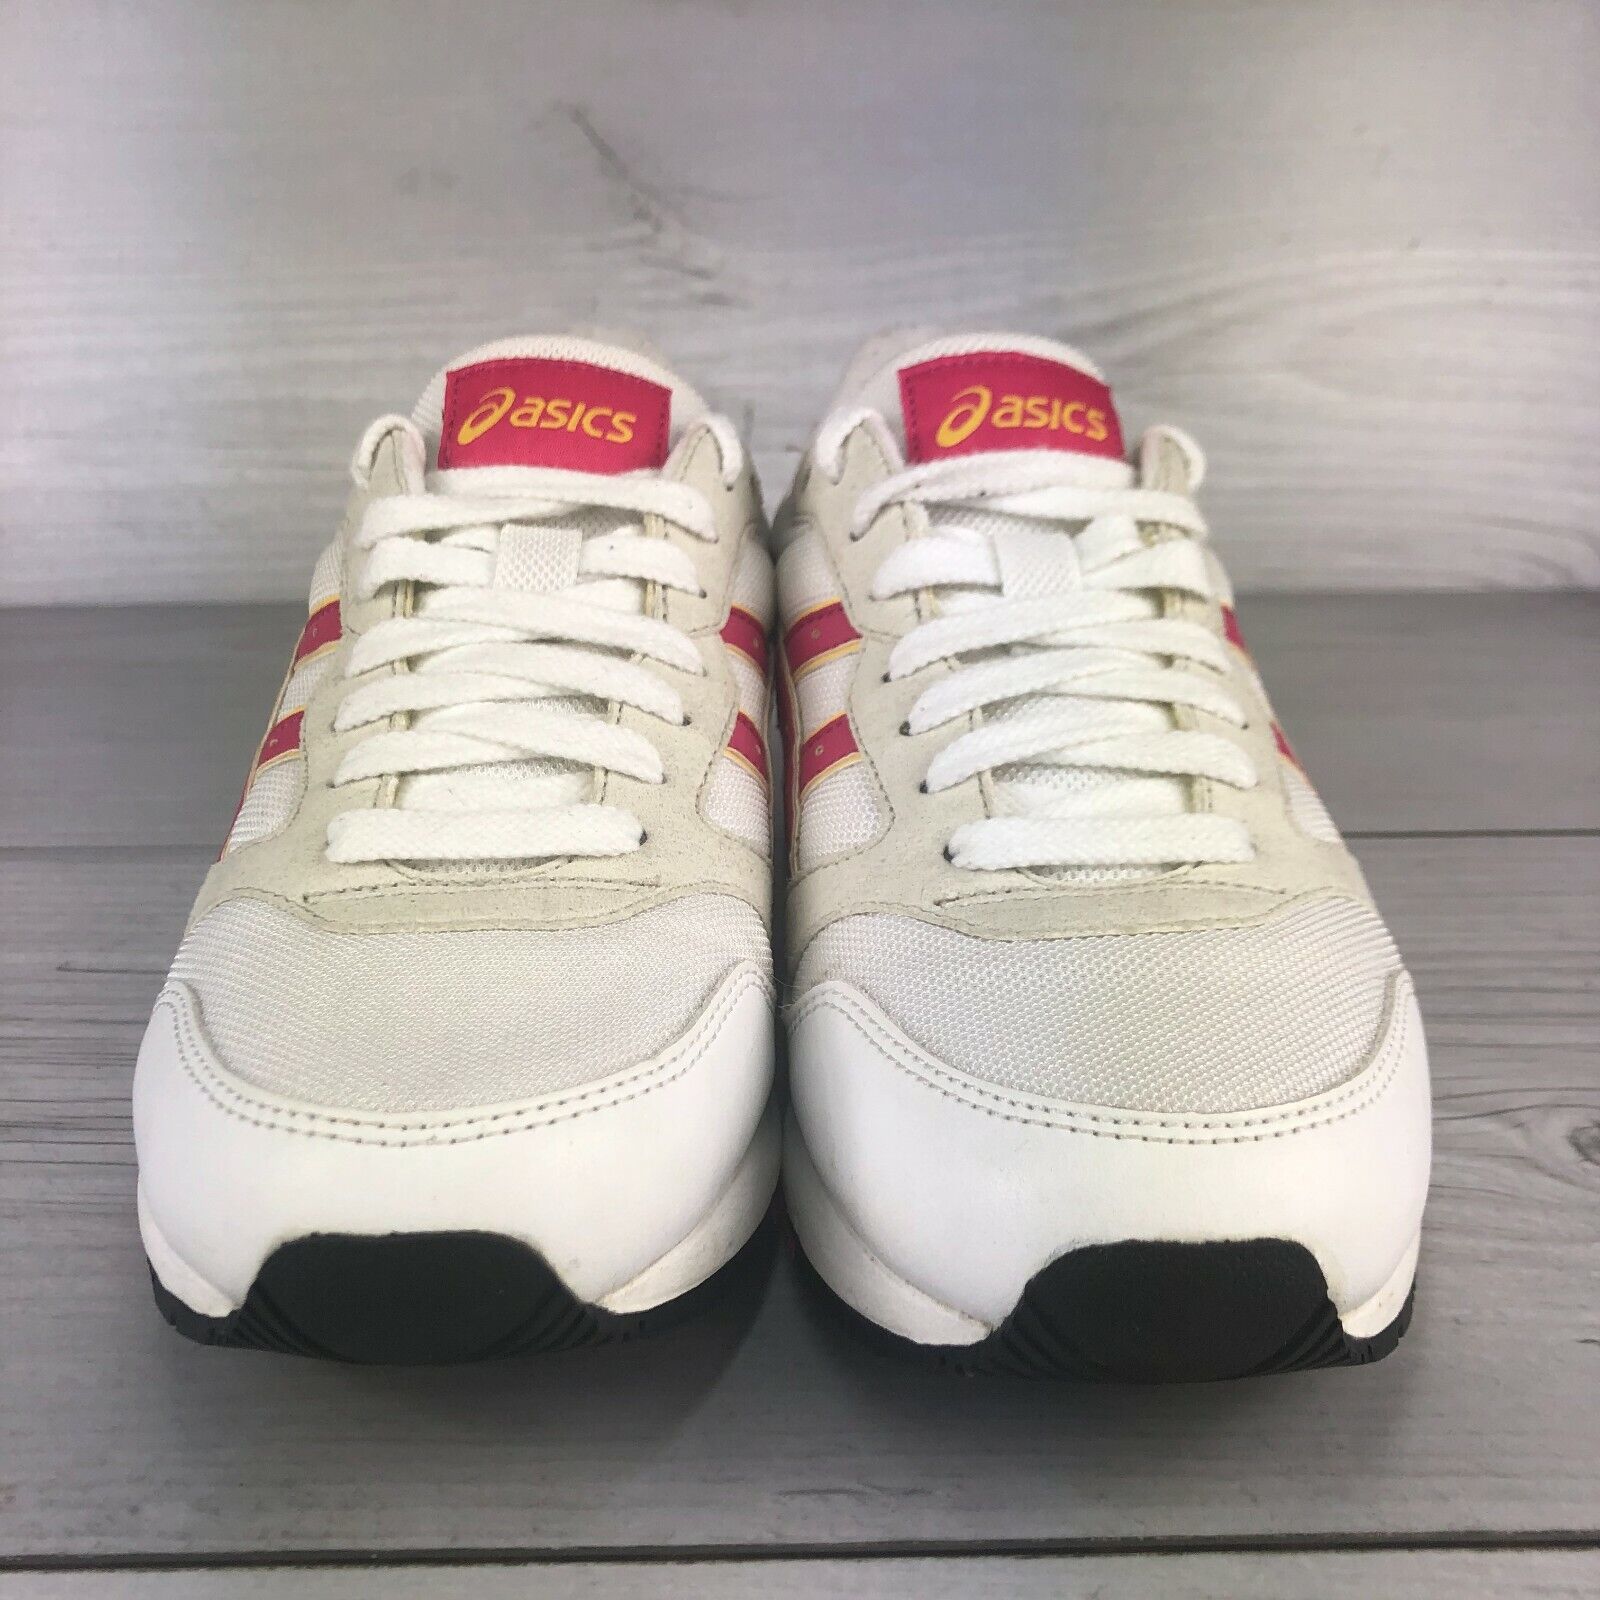 Asics Gel Womens Sz 7 Running Shoes White Pink Tennis Shoes Sneaker SAMPLE Skate